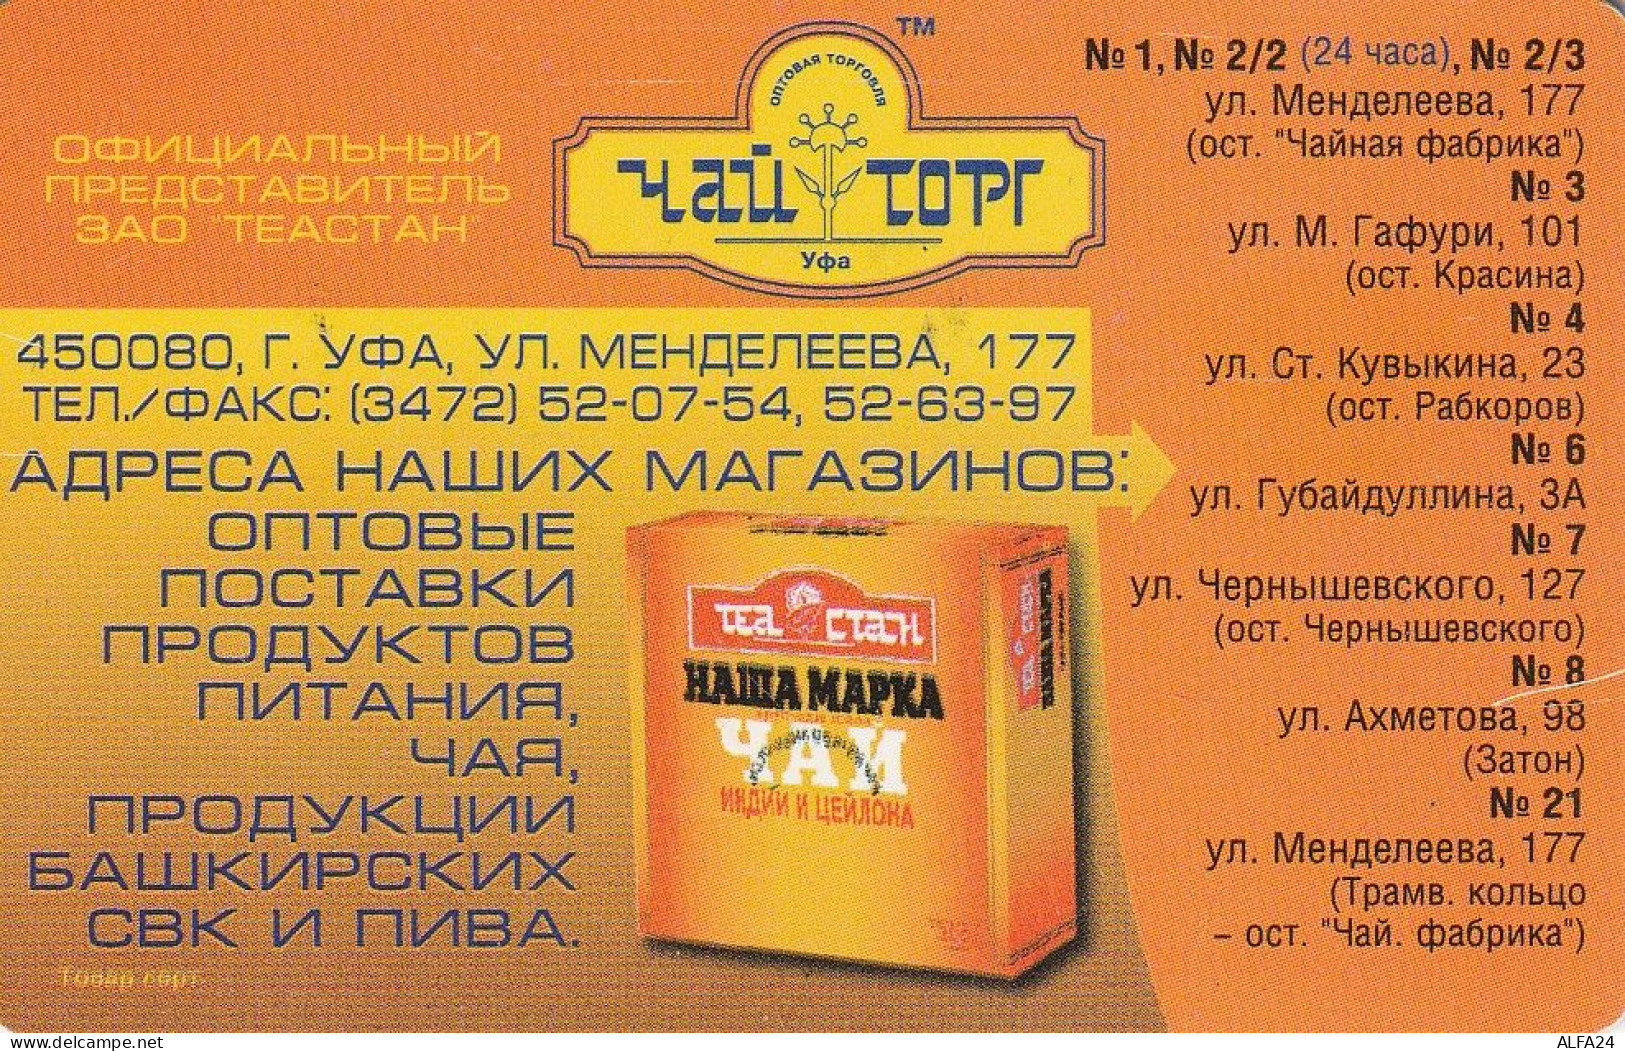 PHONE CARD RUSSIA Bashinformsvyaz - Ufa (E9.2.5 - Russland